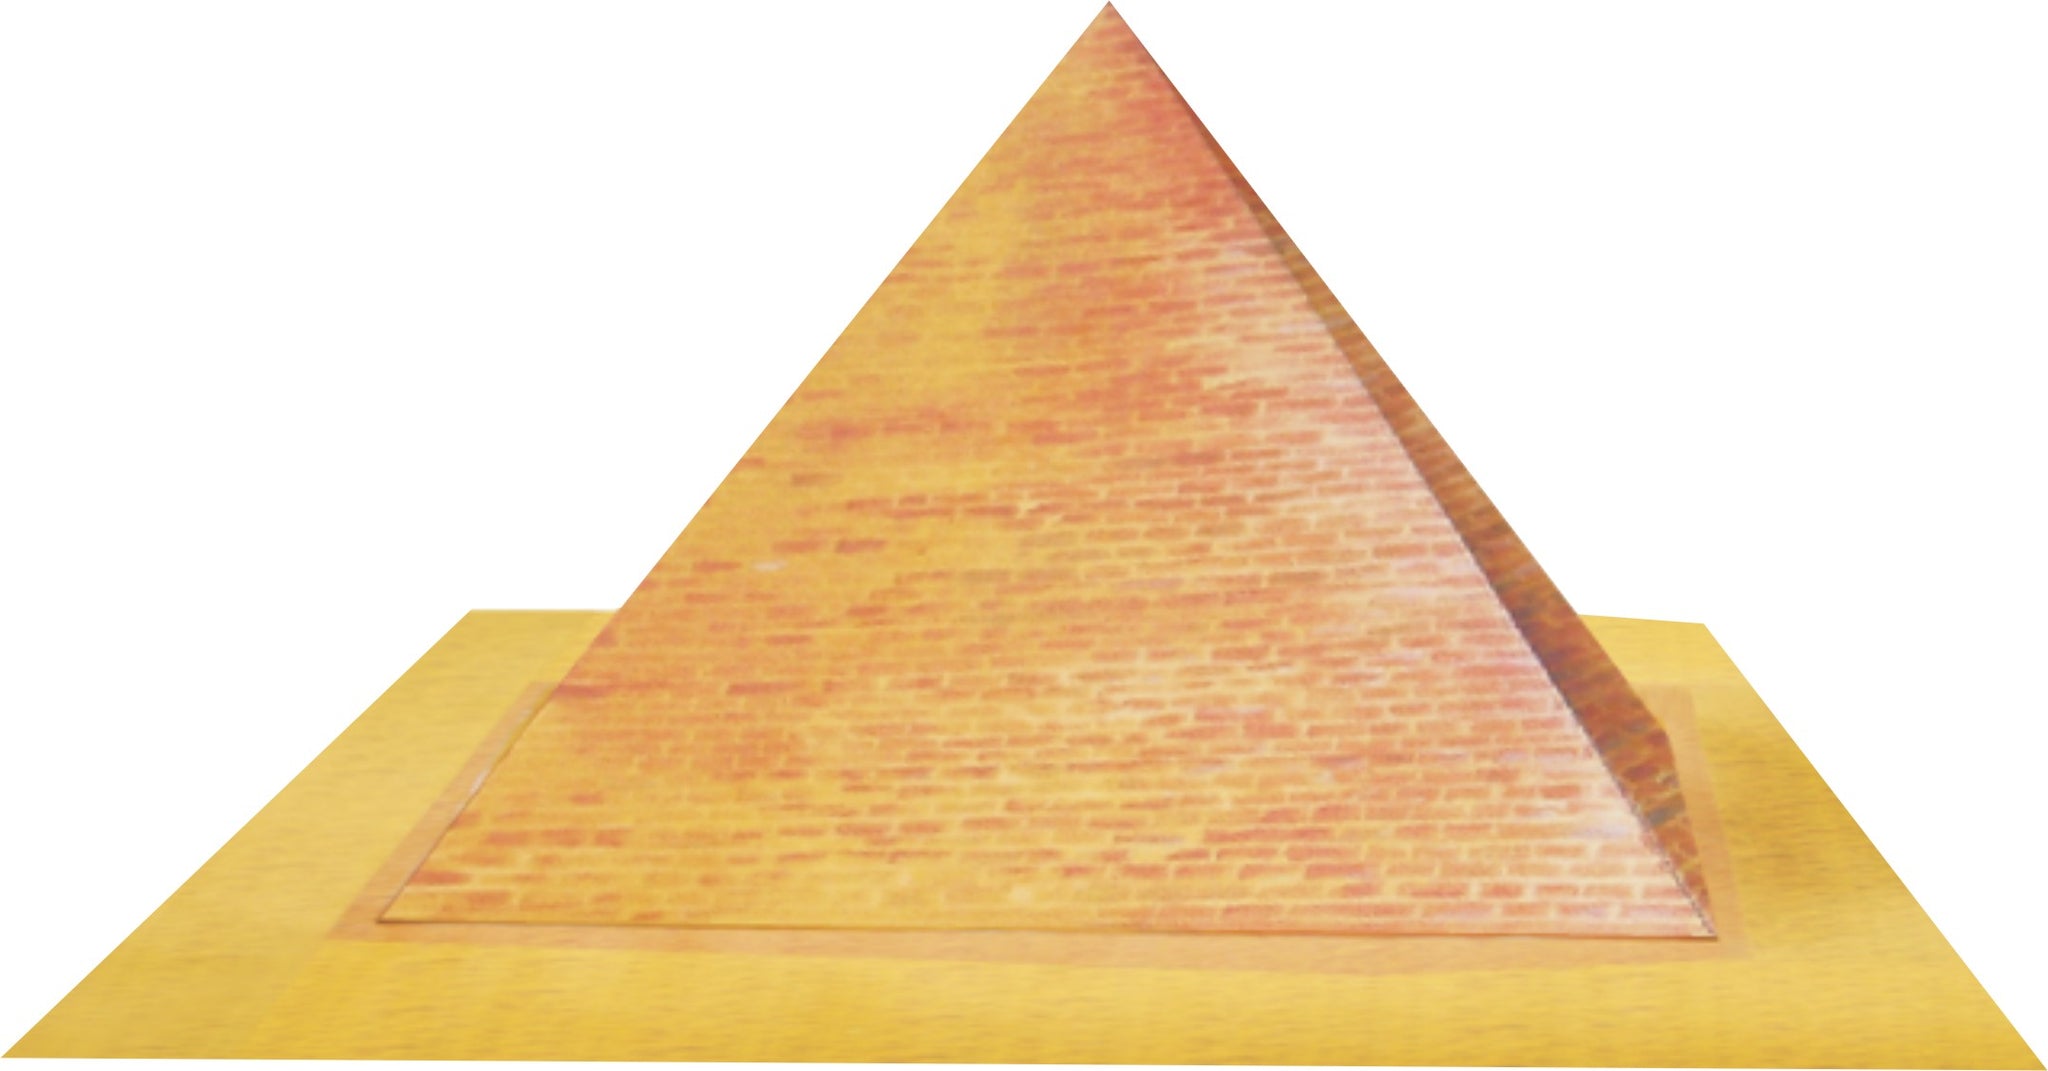 BUNDLE Egypt Crafts pyramid pharaoh PACK Manualidades Egipto Pirámide  español